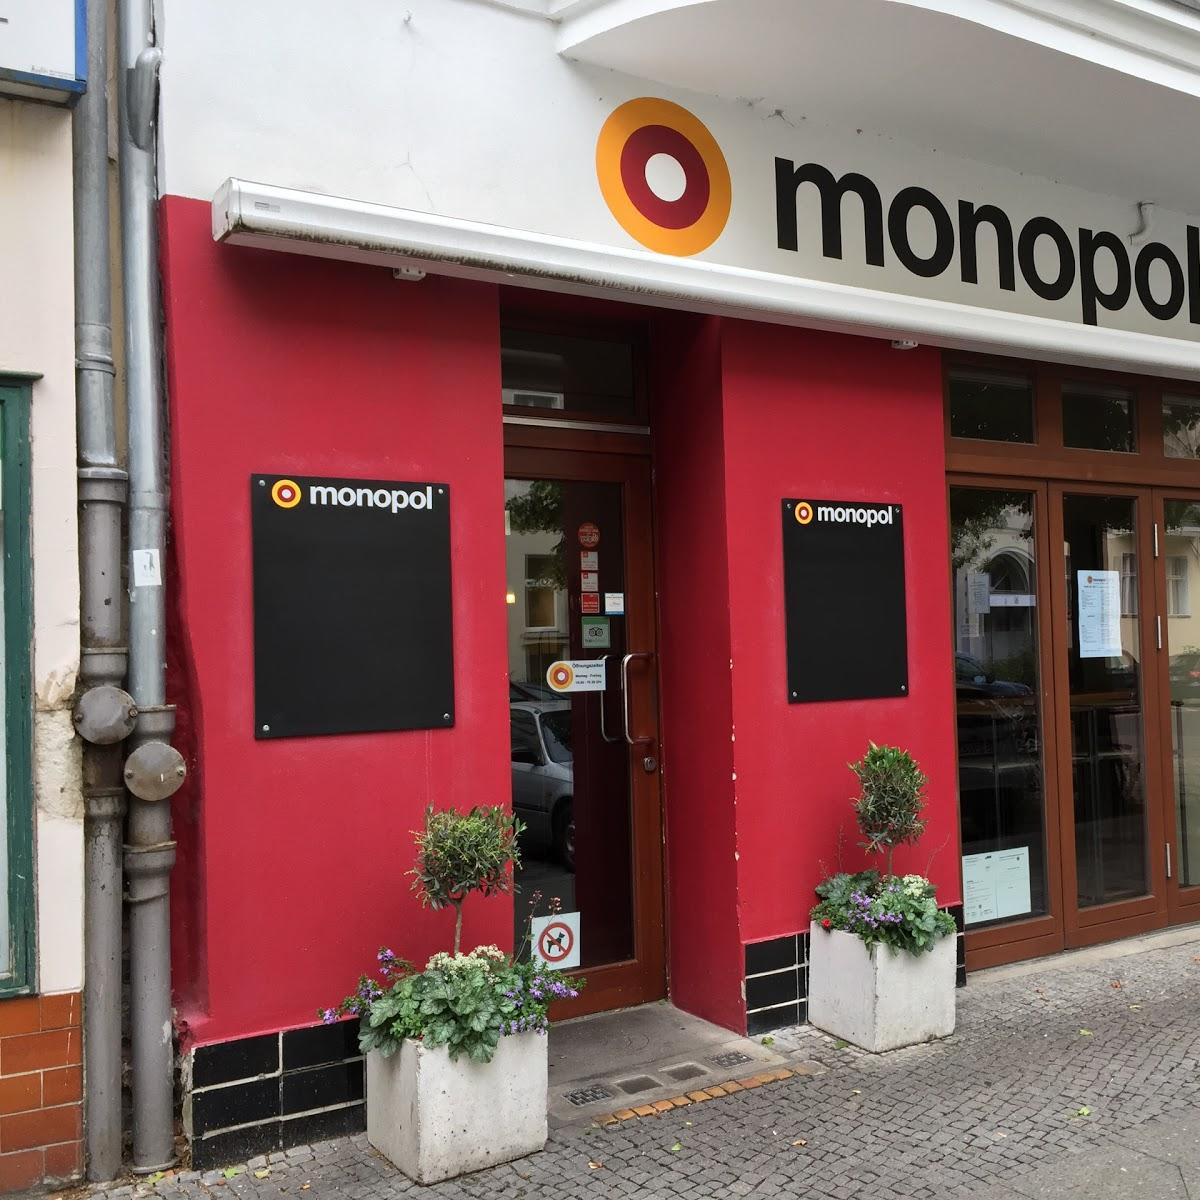 Restaurant "monopol Inh. Alicja Lenhardt" in Berlin